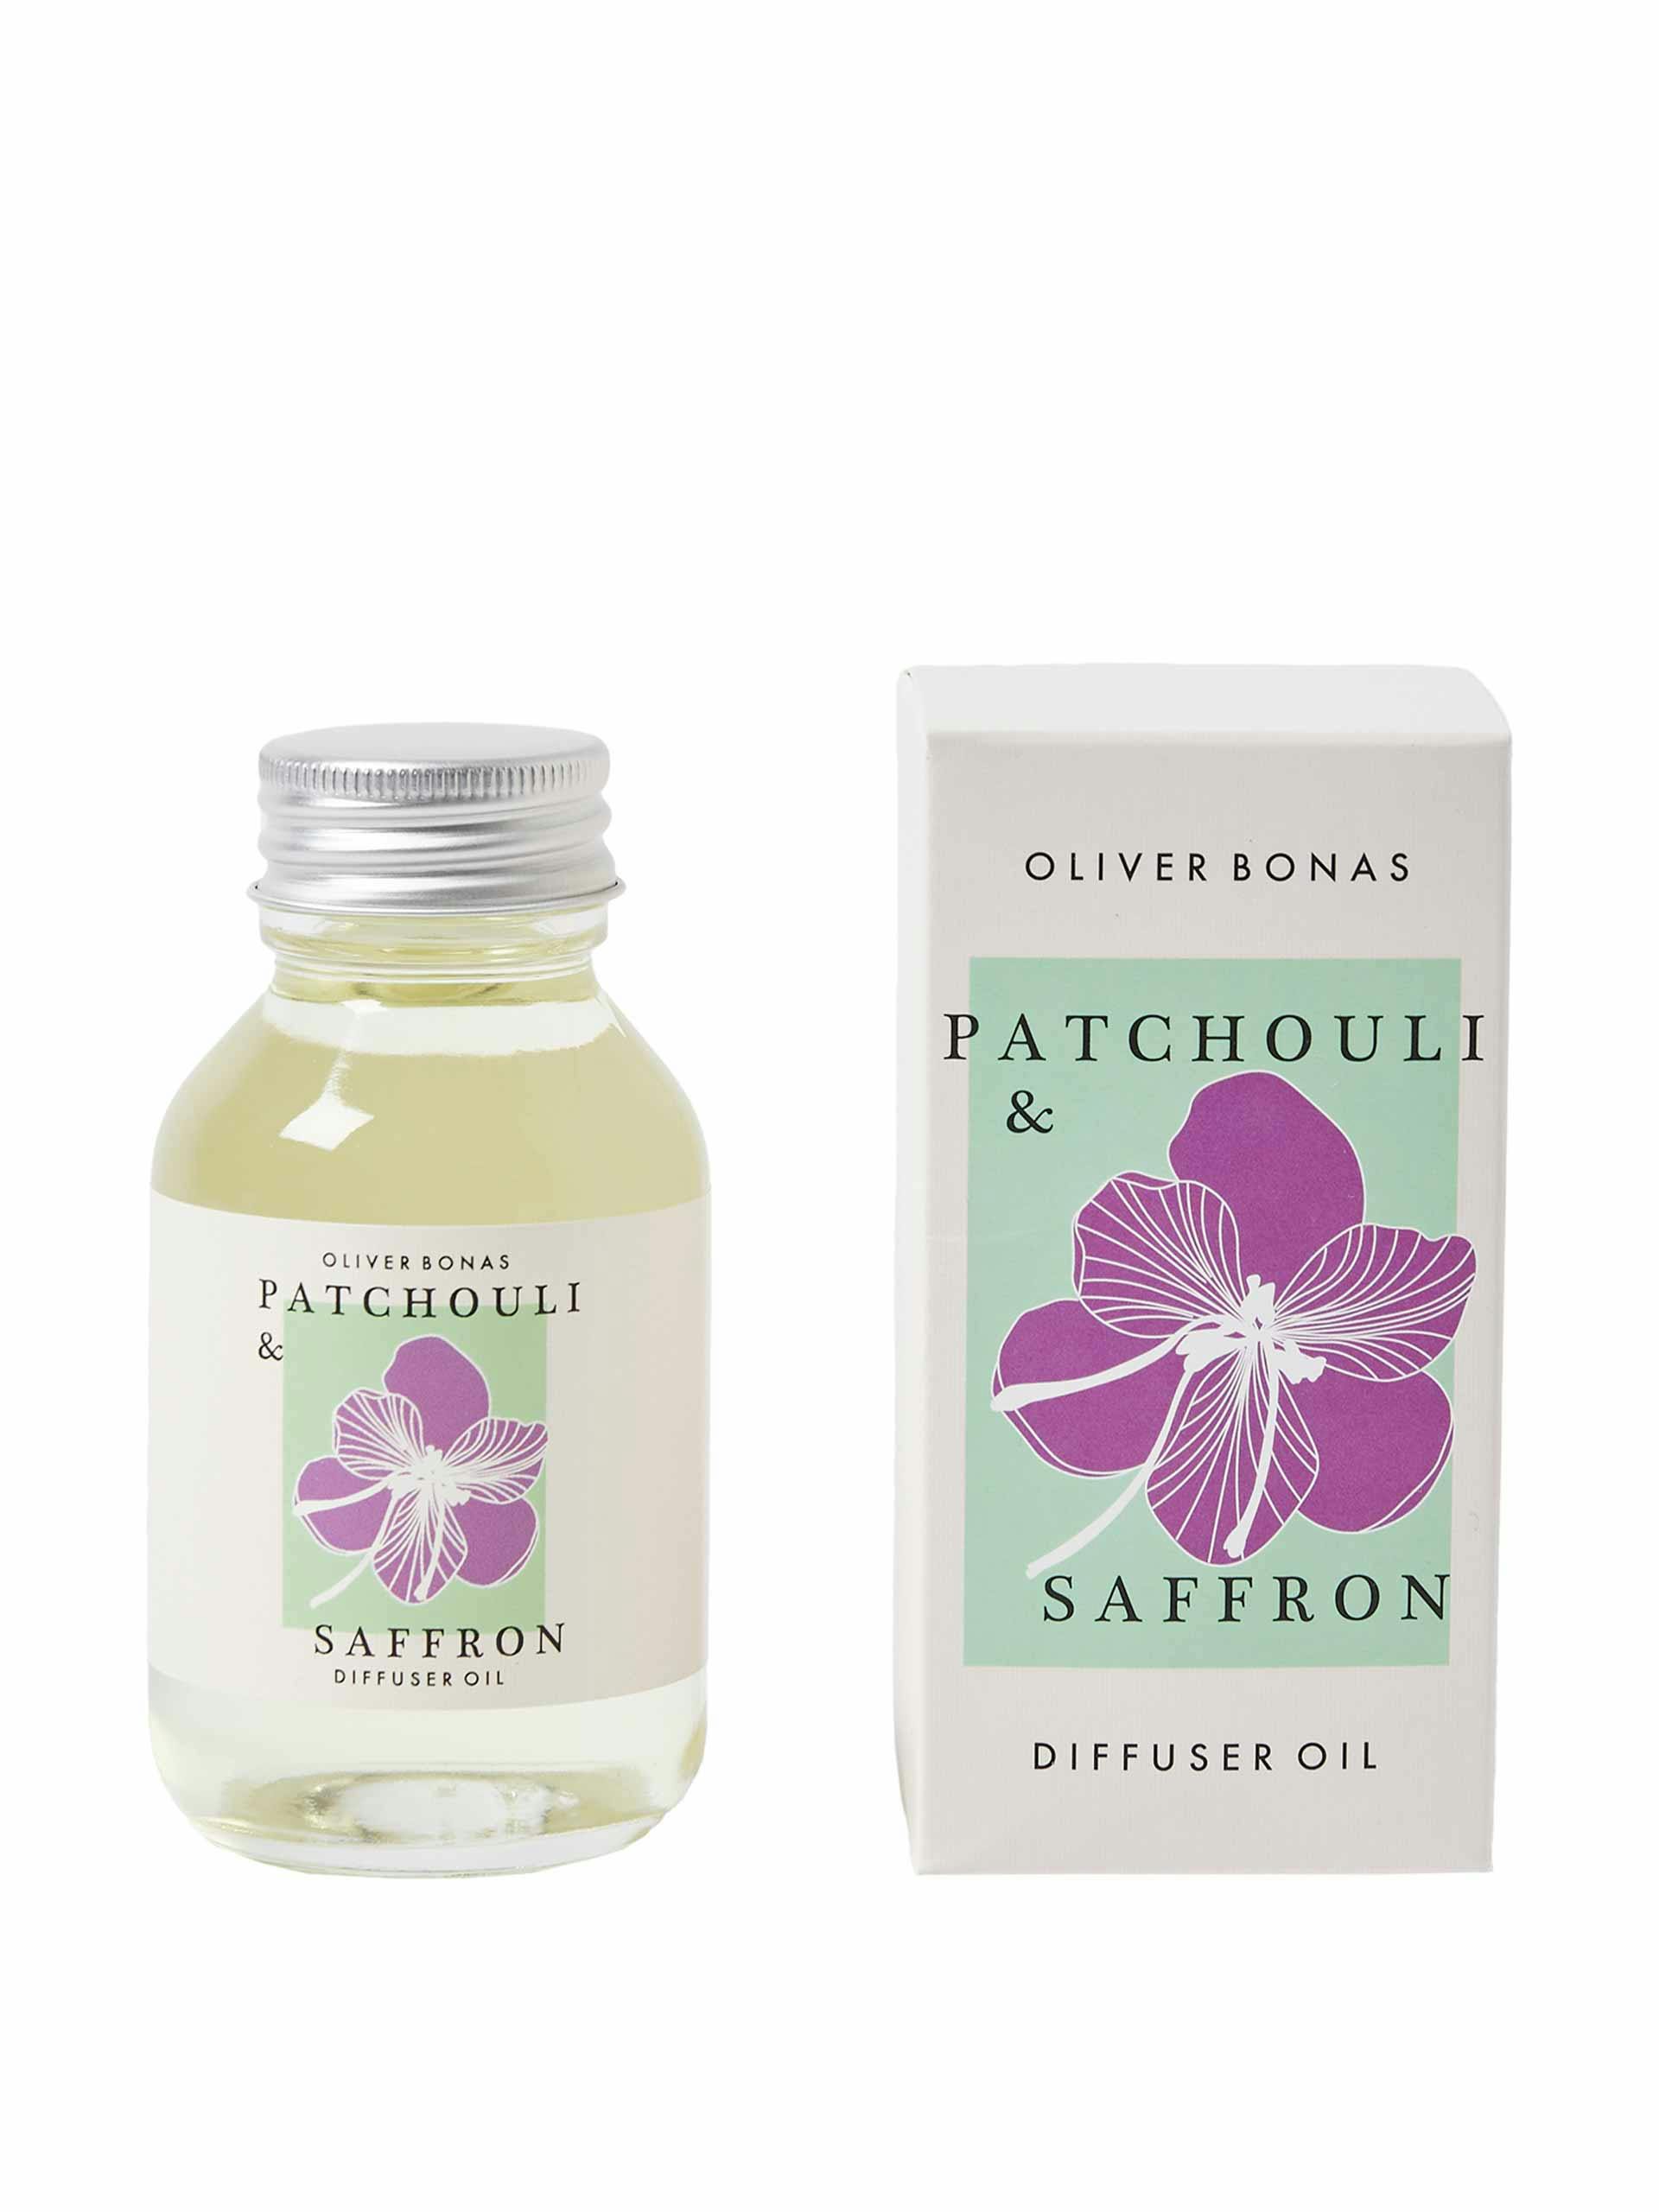 Patchouli and Saffron scented diffuser oil